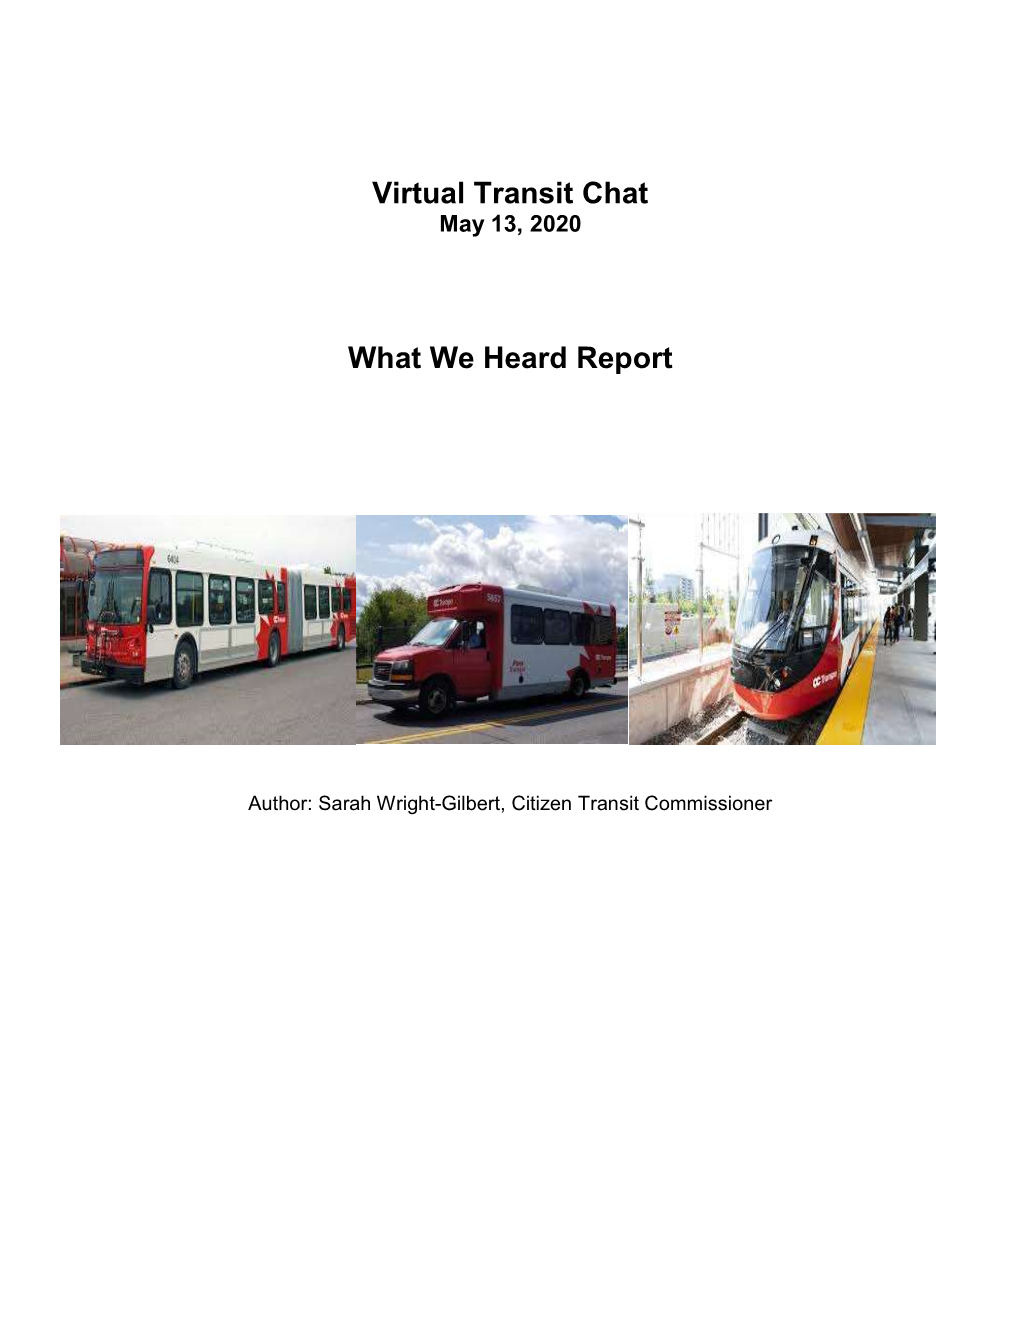 Virtual Transit Chat What We Heard Report